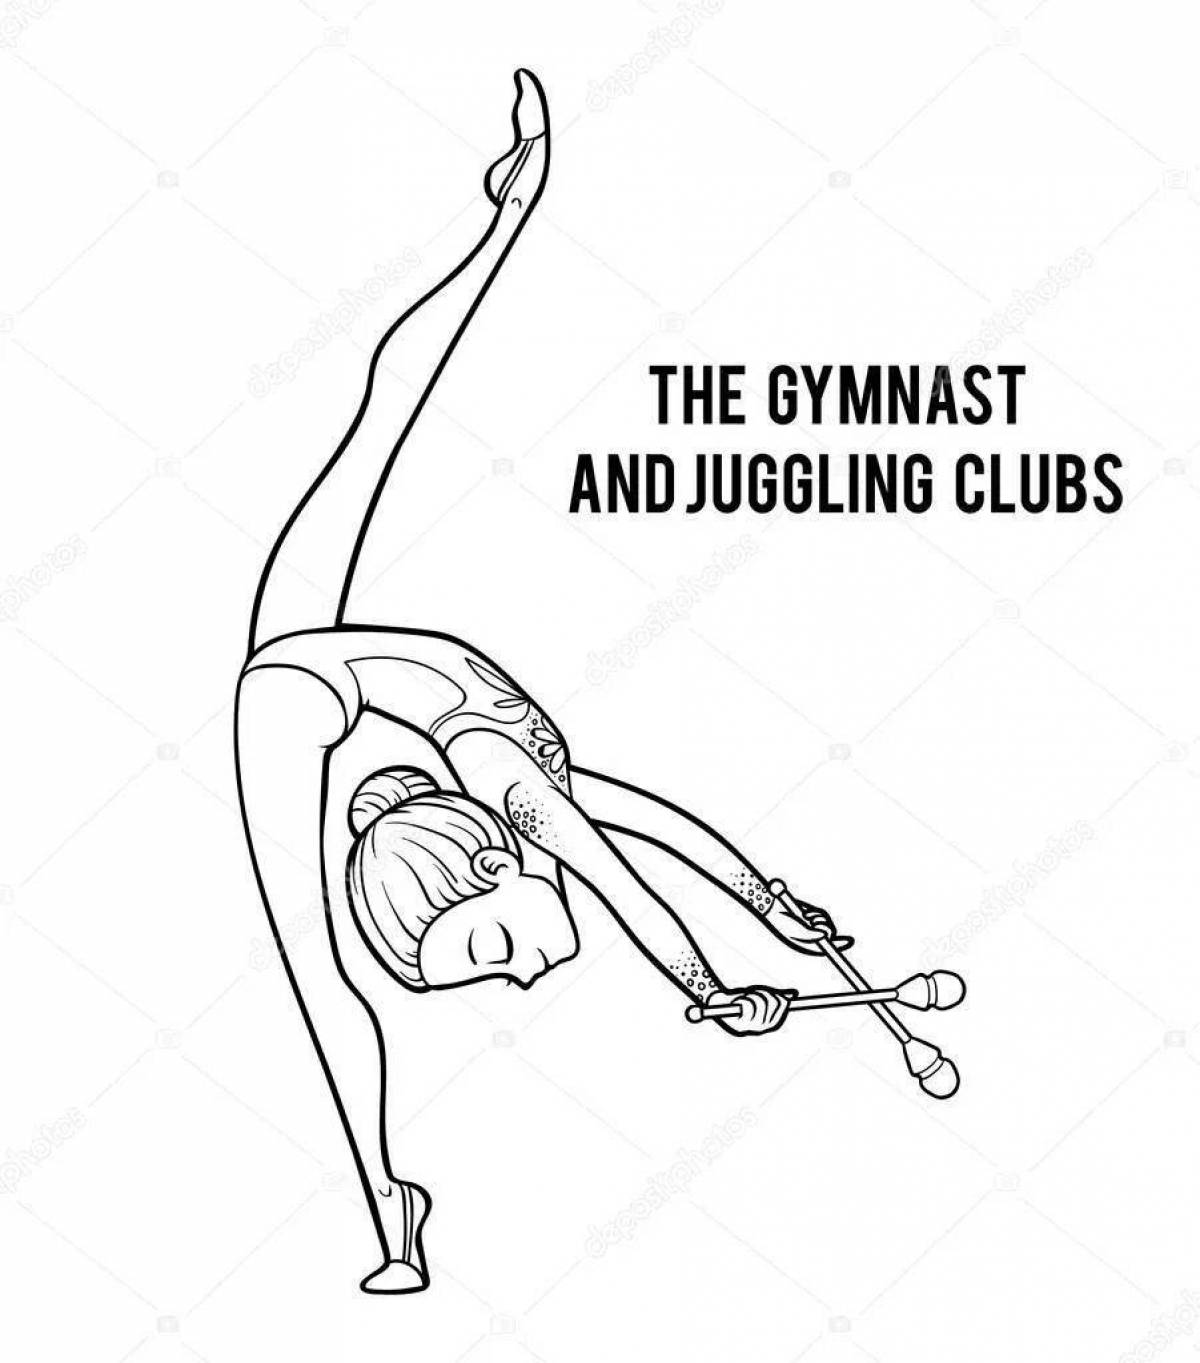 Coloring book balanced rhythmic gymnasts